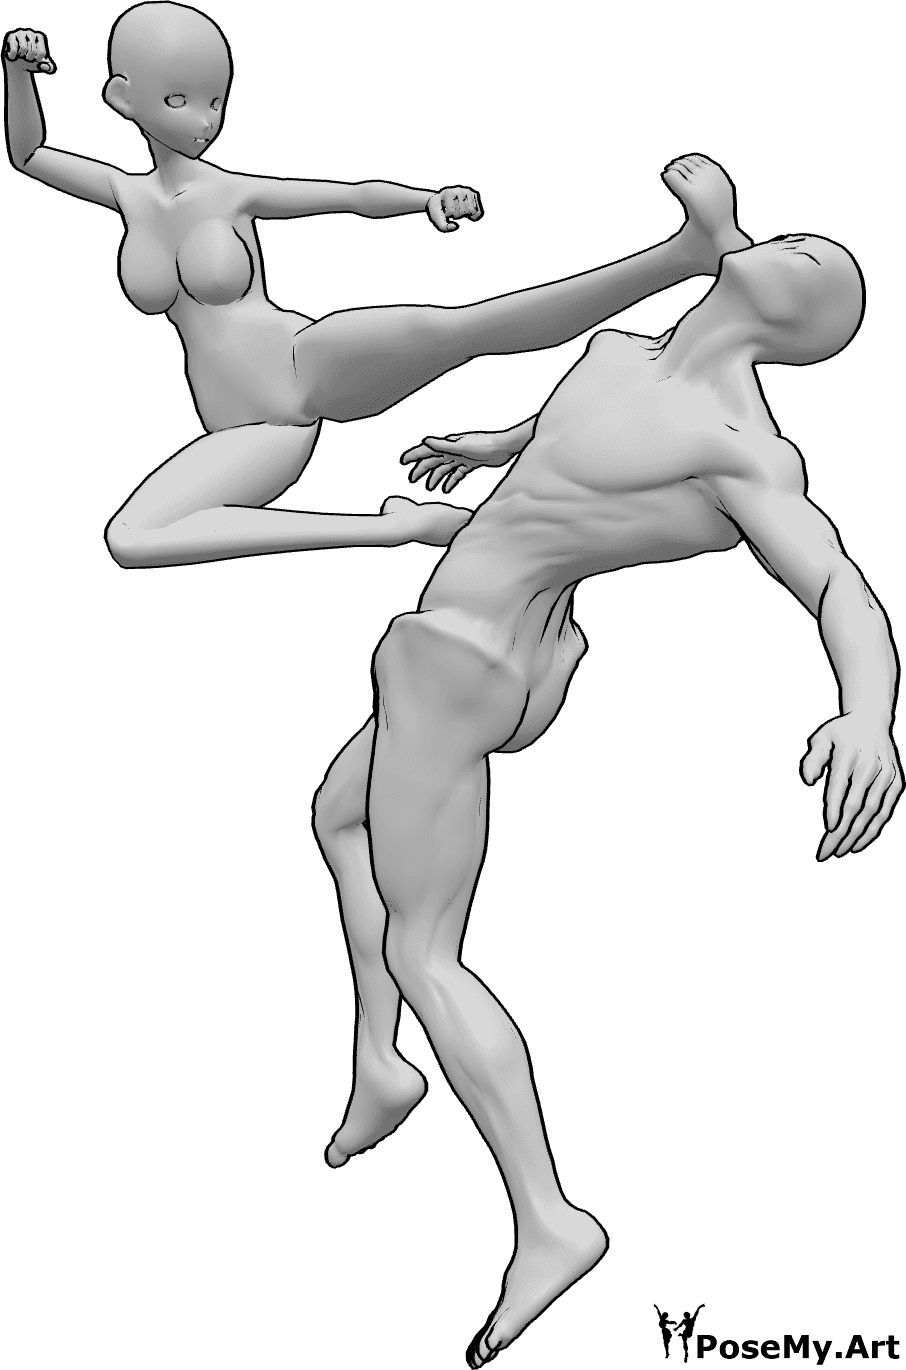 Posen-Referenz- Anime Held kicking Pose - Anime-Heldin tritt dem Feind gegen den Kopf, der unbewusst nach hinten fällt